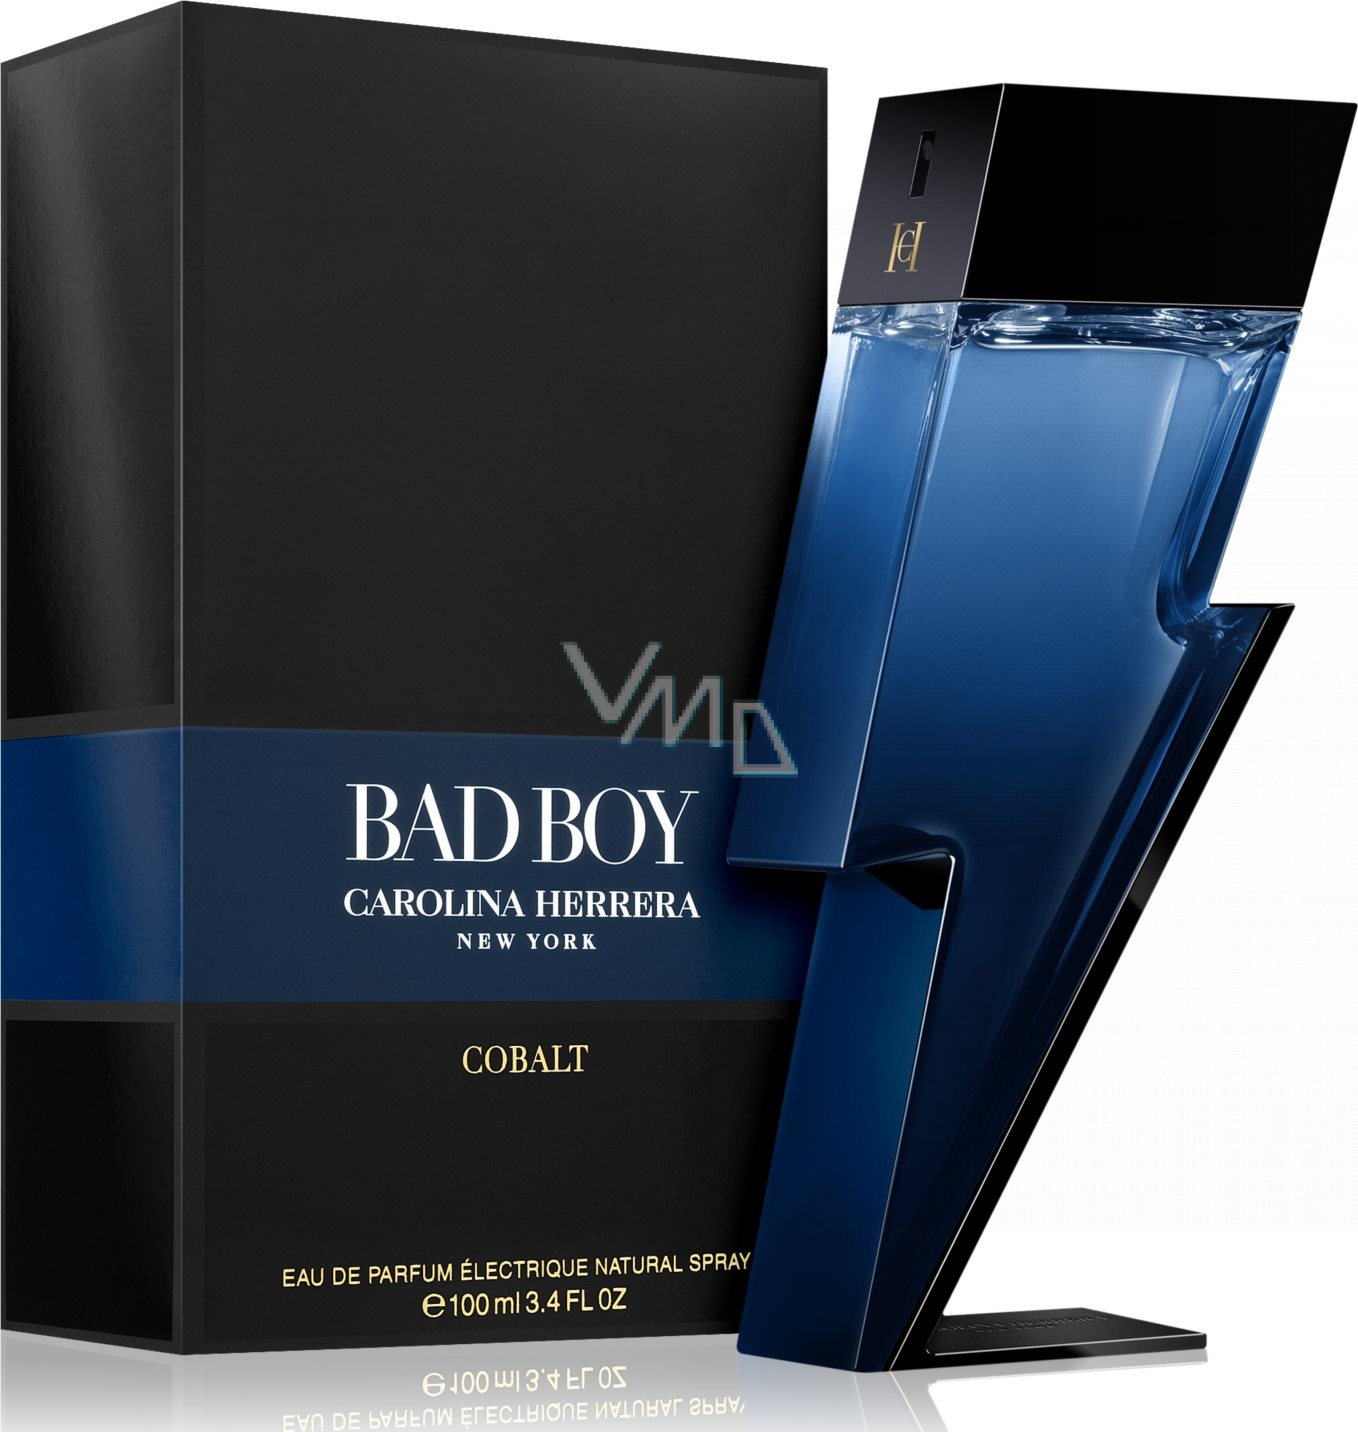 Carolina Herrera Bad Boy Cobalt eau de parfum for men 100 ml VMD parfumerie drogerie